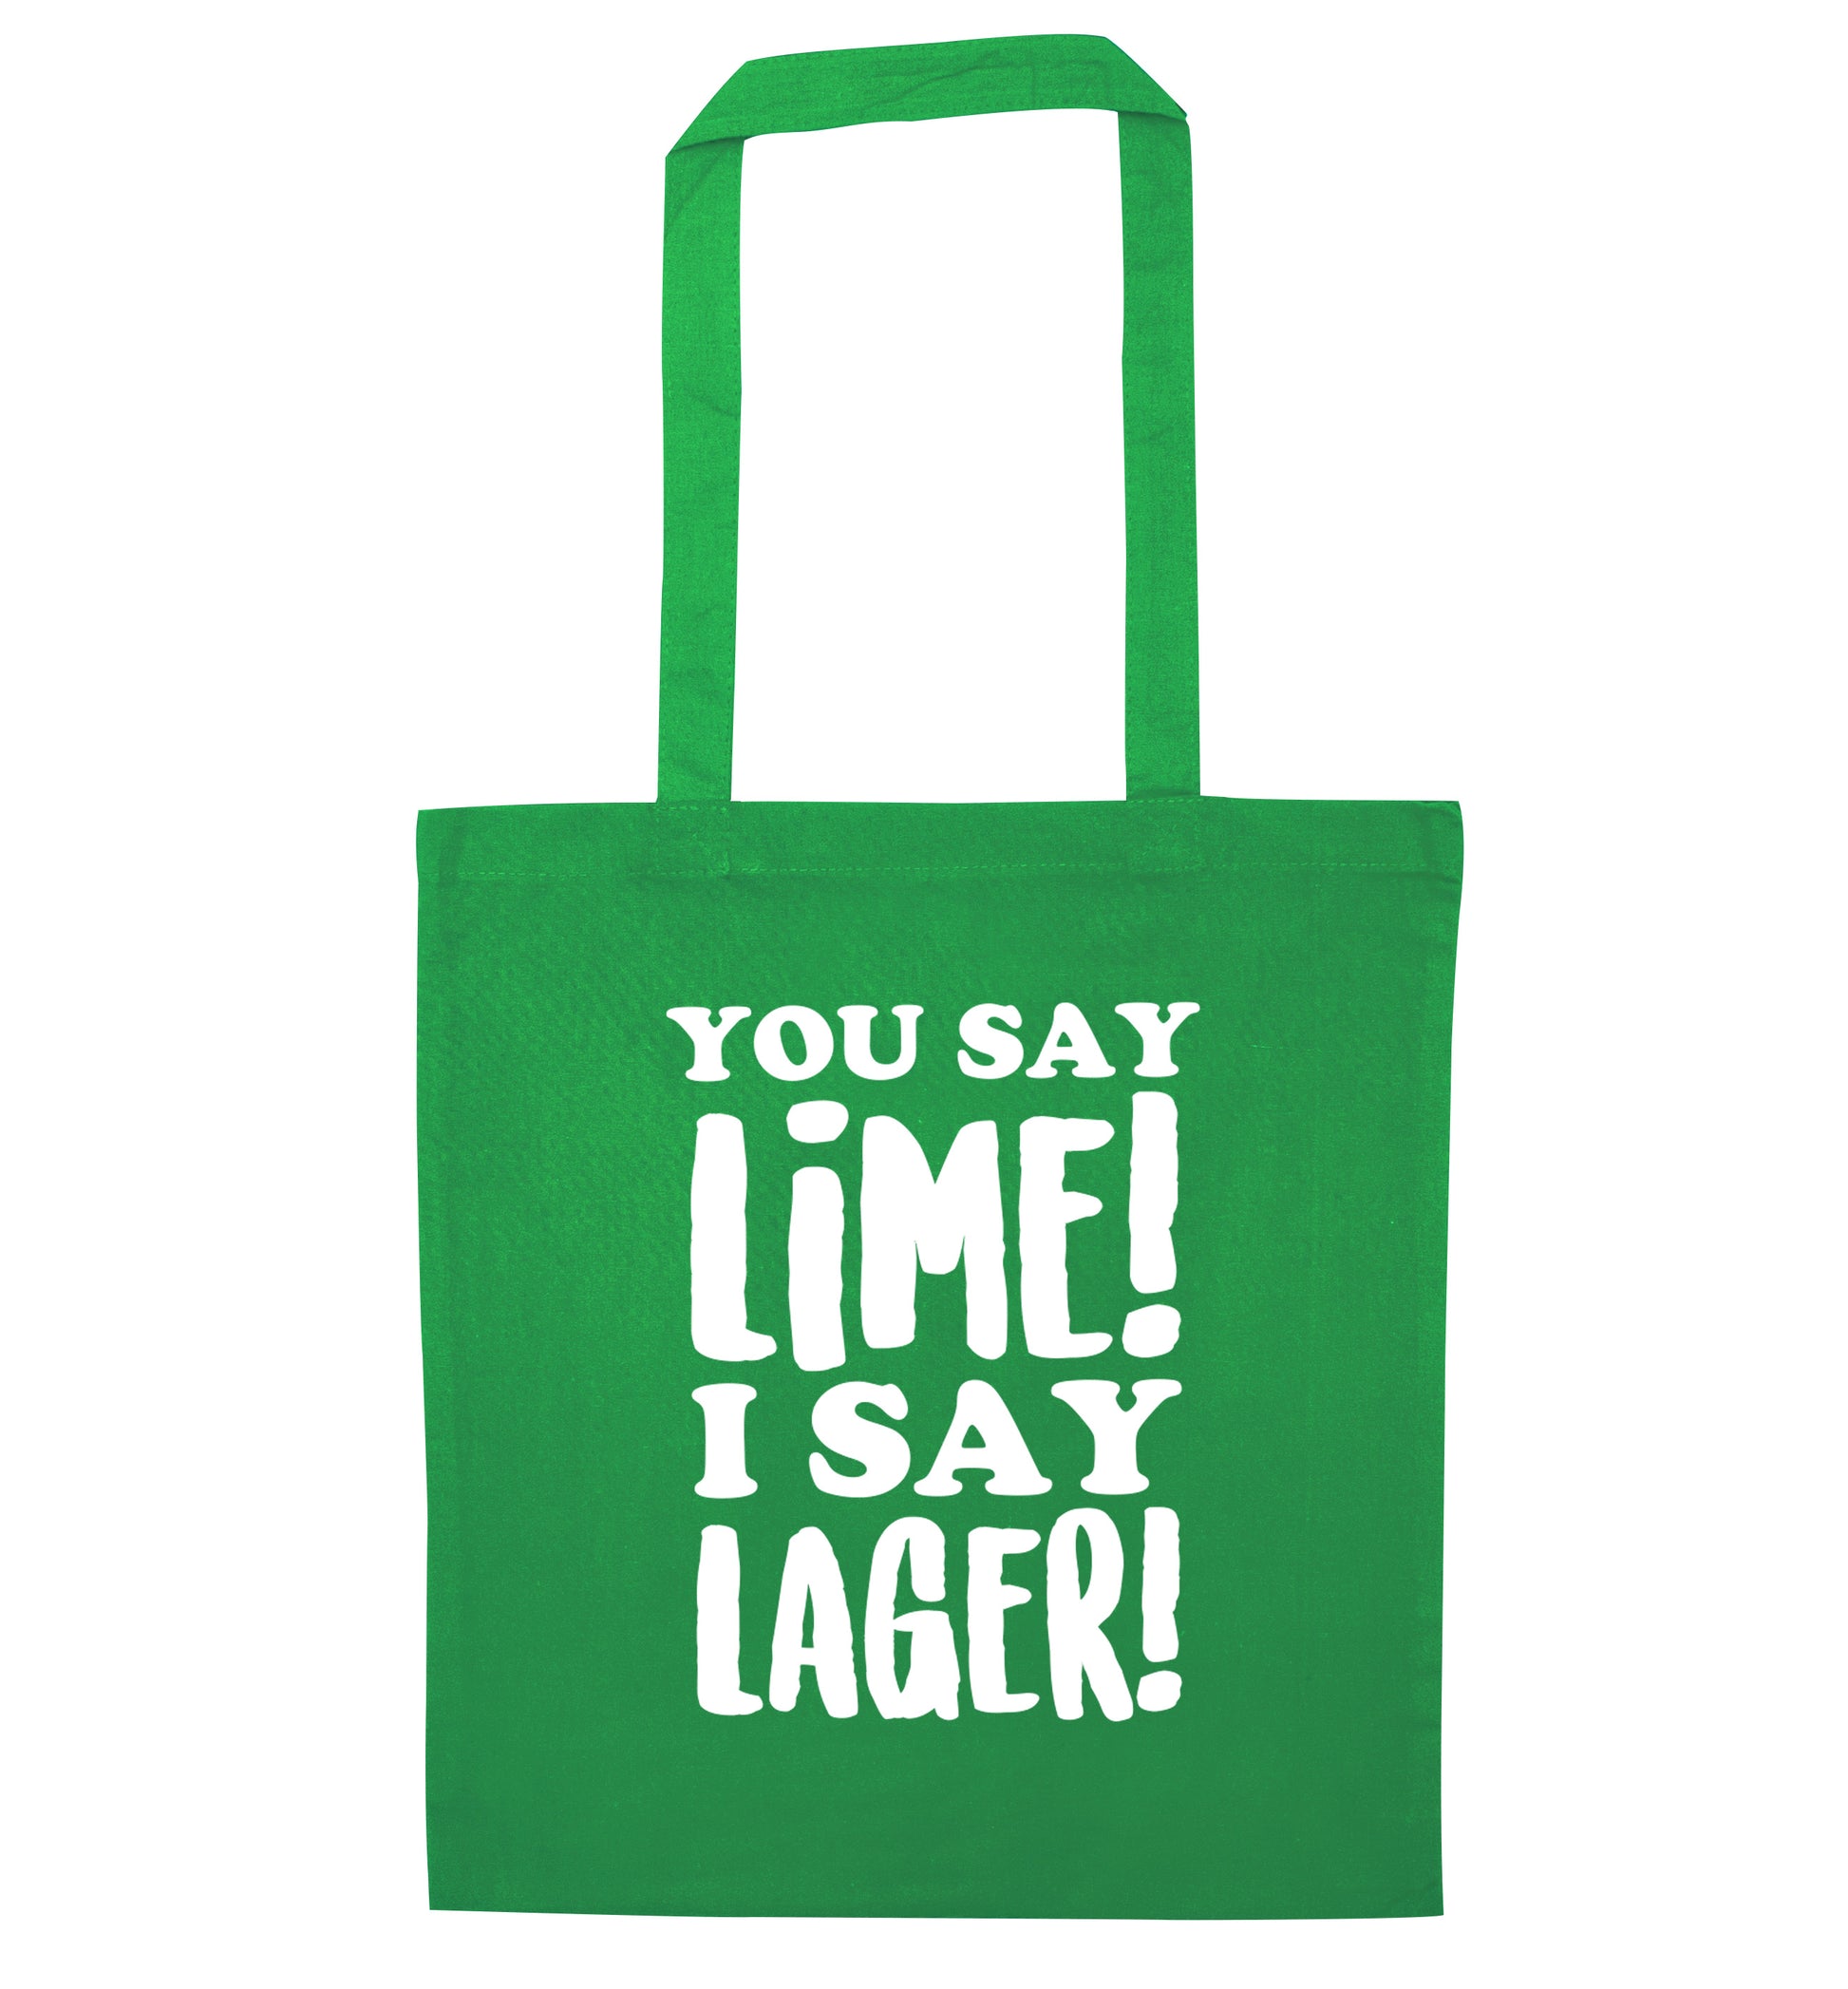 You say lime I say lager! green tote bag